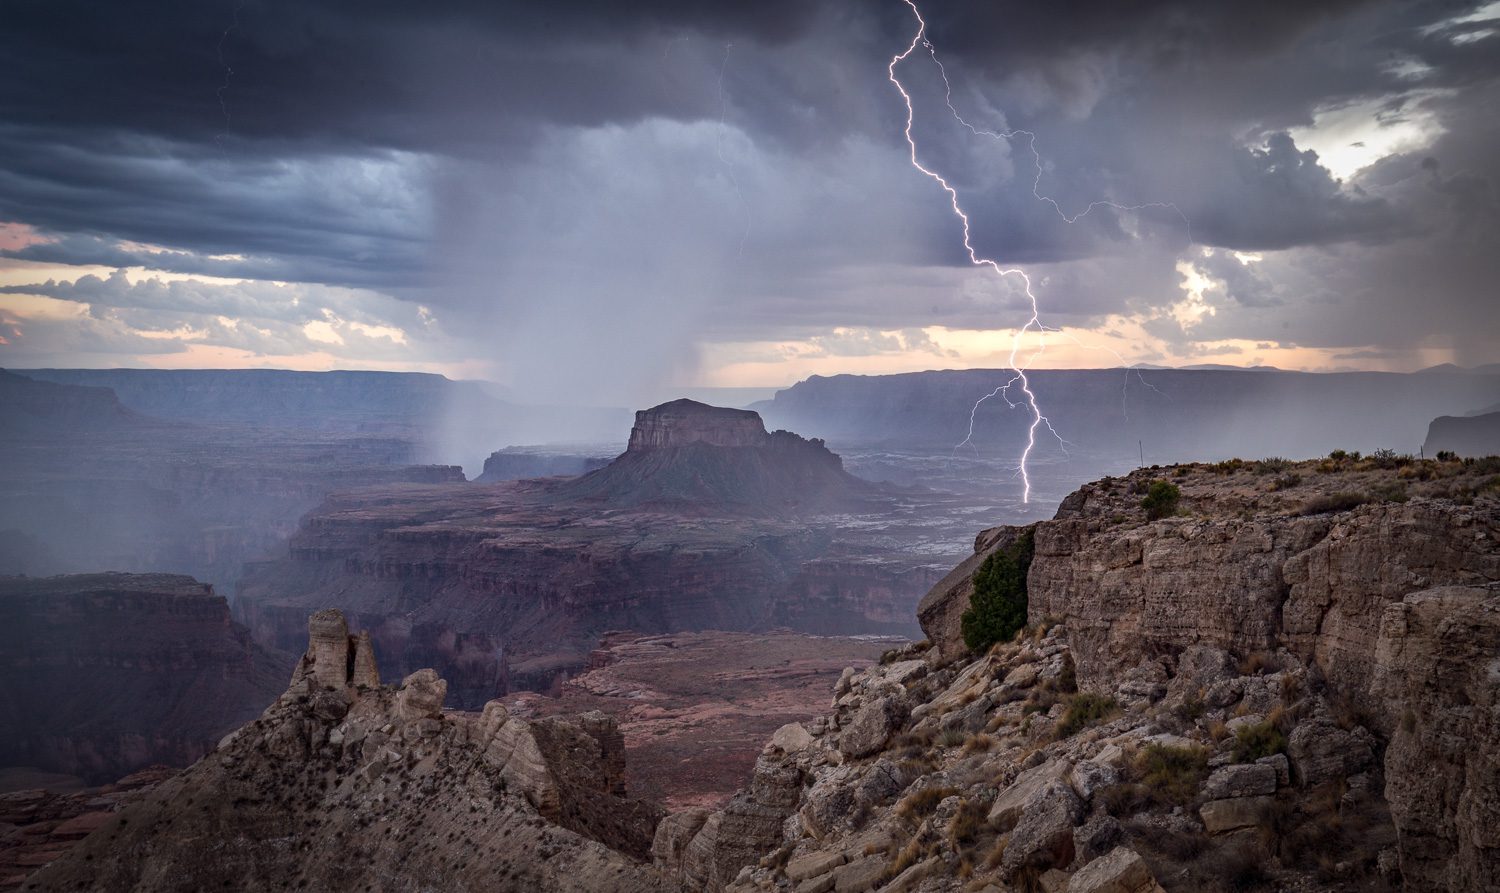 Grand Canyon Lightning Storm Photography Workshop